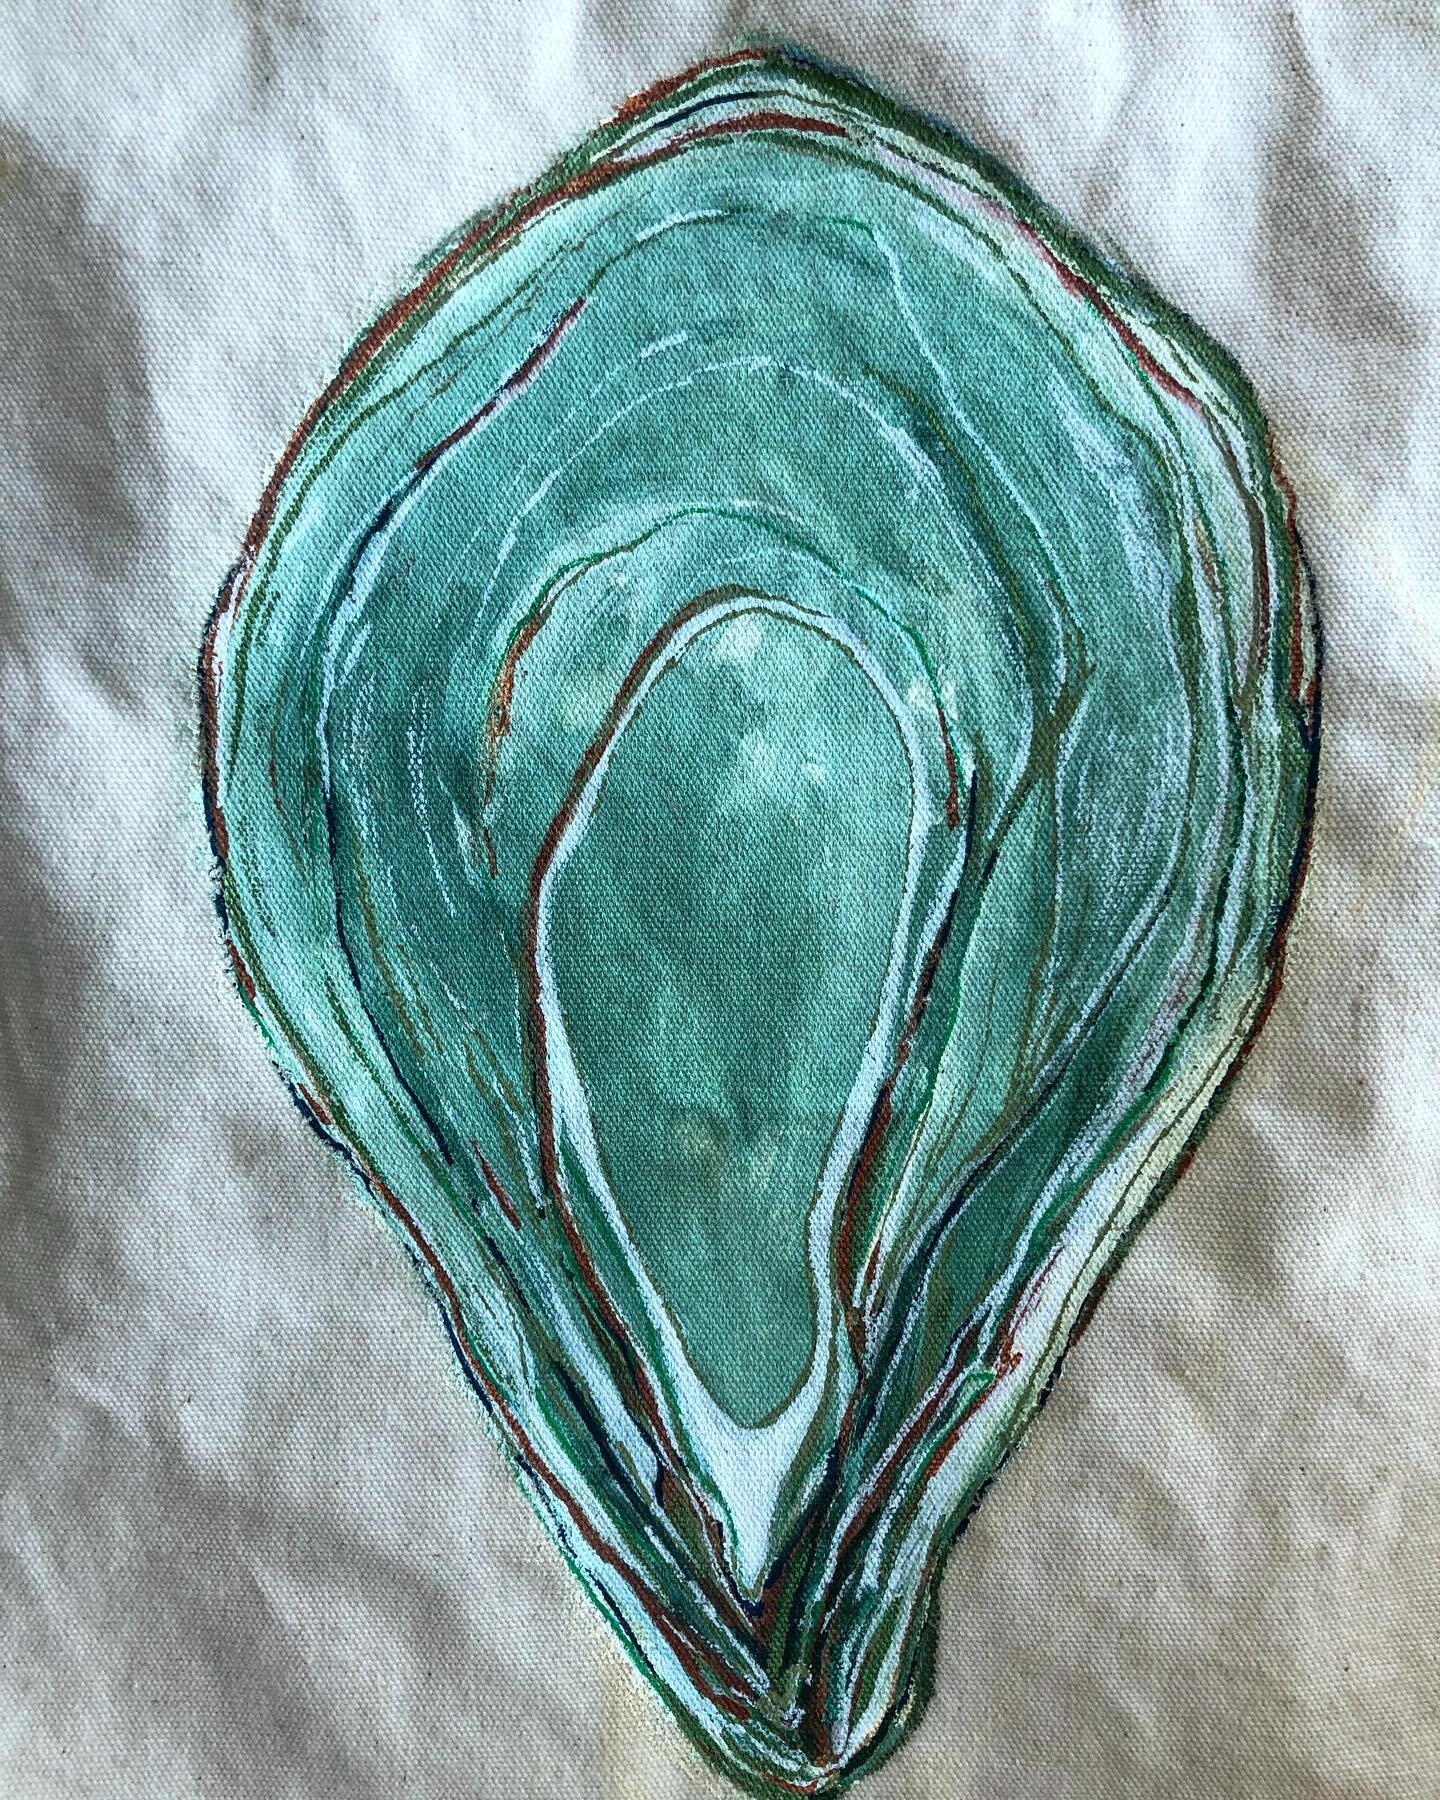 It&lsquo;s an oyster painted on a tote bag. 🦪👜
.
.
#totebag #paintedbag #oysterdrawing #felinesart #paintedcanvasbag #foodpainting #customtotebag